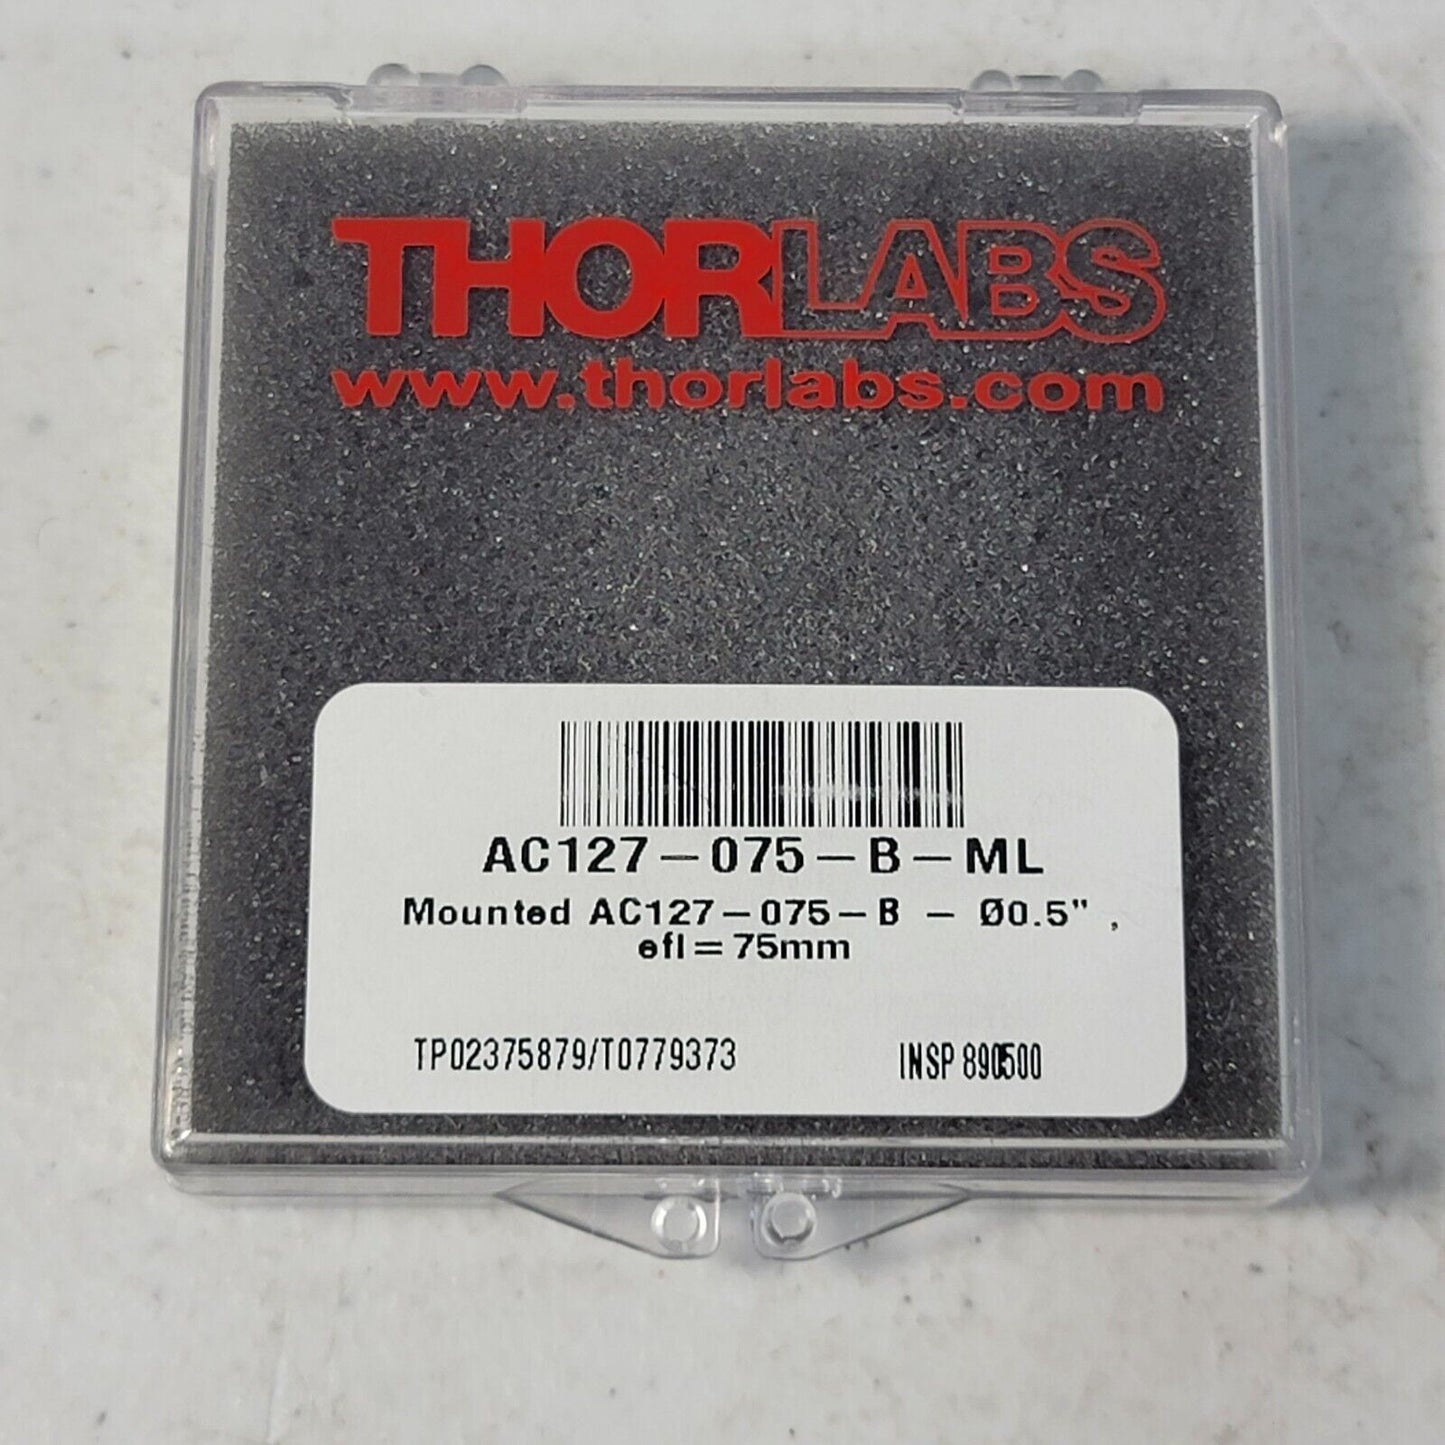 Thorlabs AC127-075-B-ML 1/2" OD Achromatic Doublet 650-1050nm